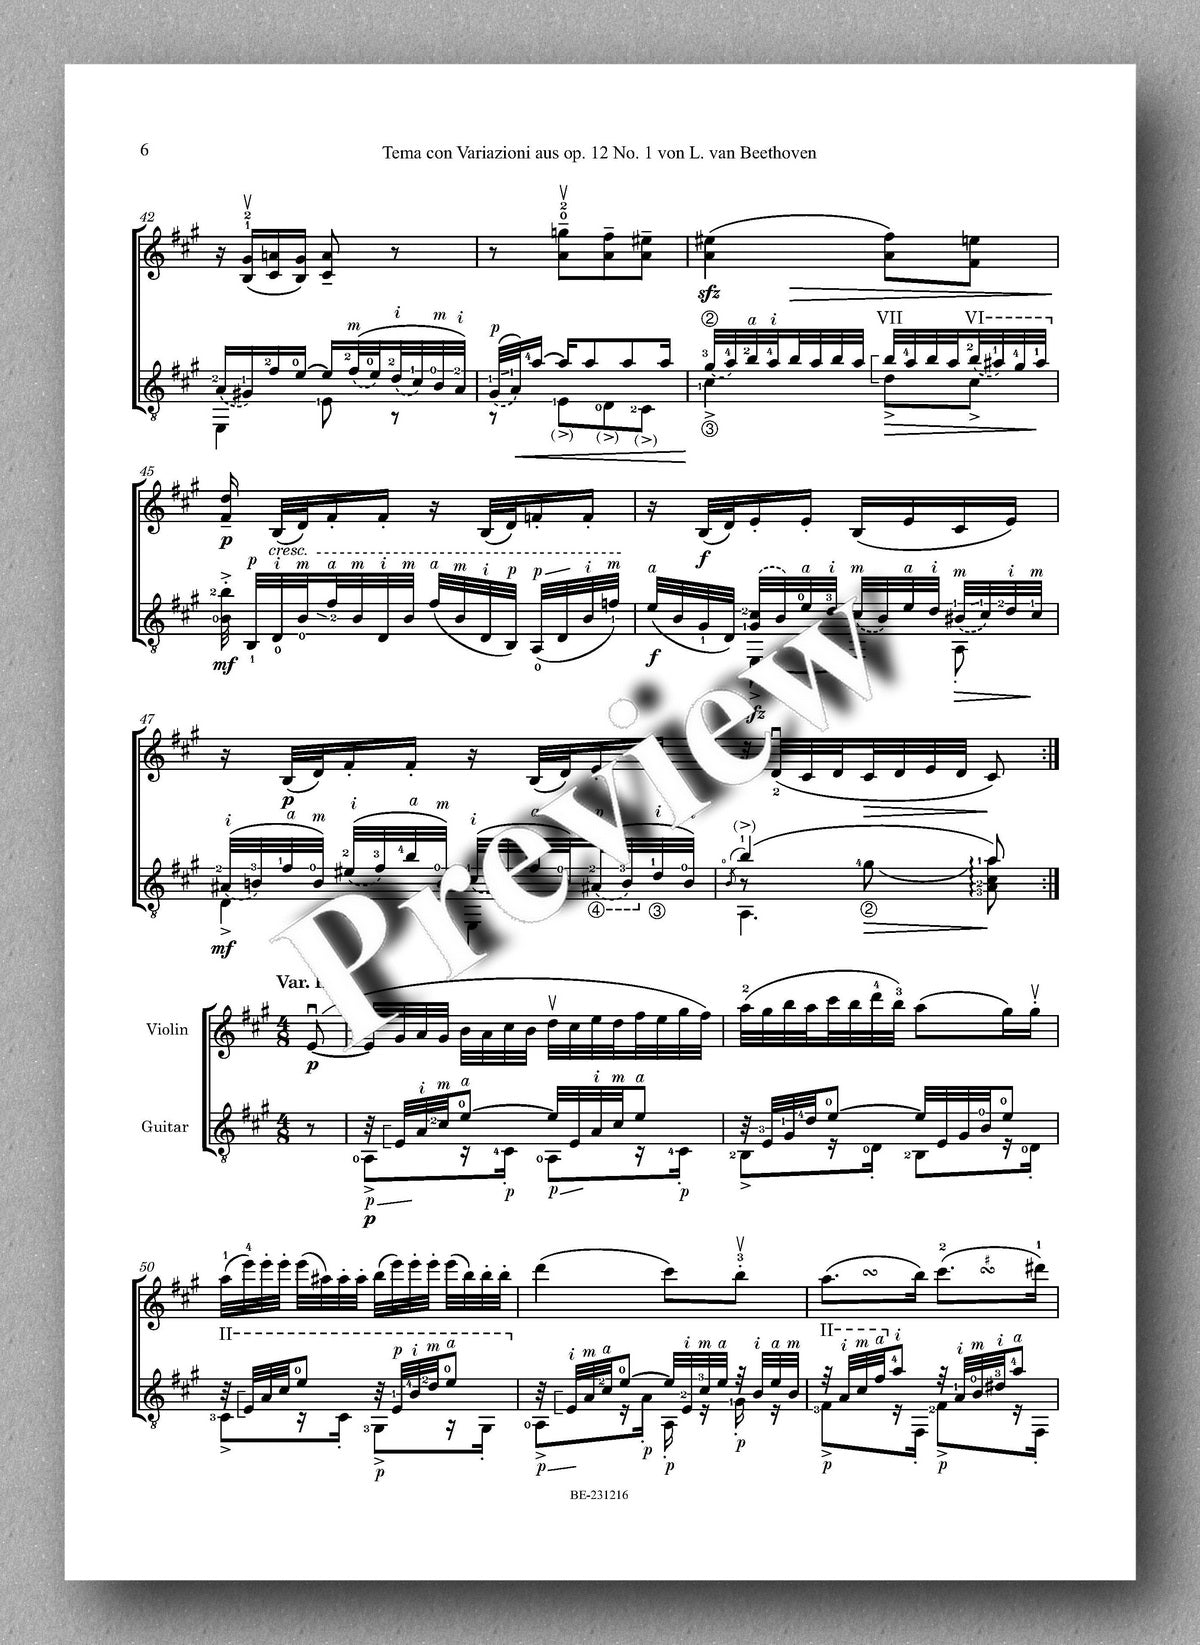 Ferdinand Rebay, Tema con Variazioni aus op. 12 No. 1 von L. van Beethoven - preview of the music score 3